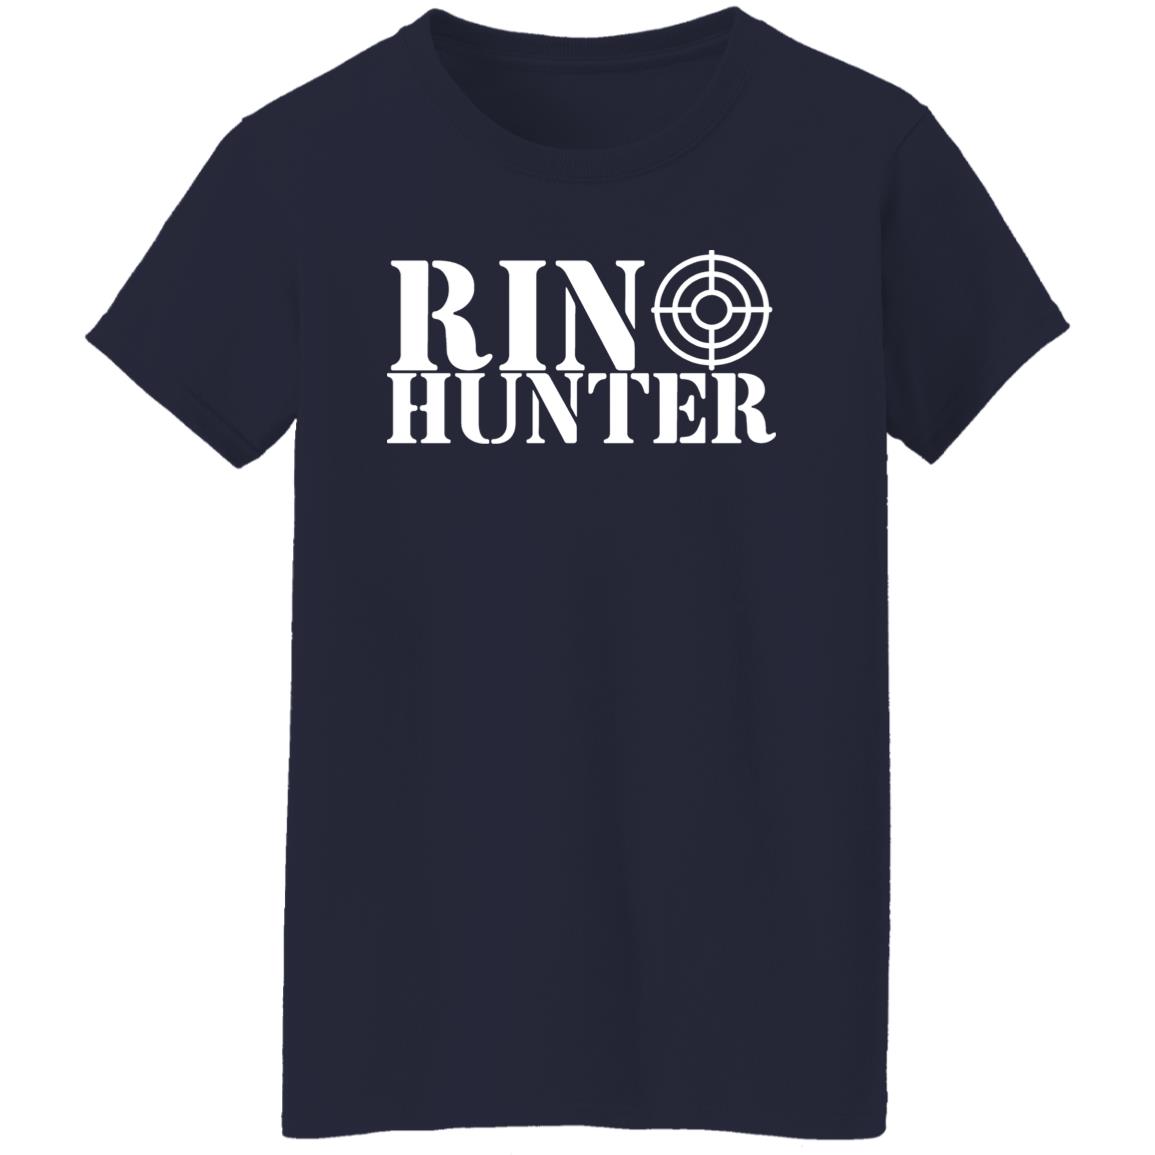 Ethan Schmidt PatriotTakes Rin Hunter Shirt